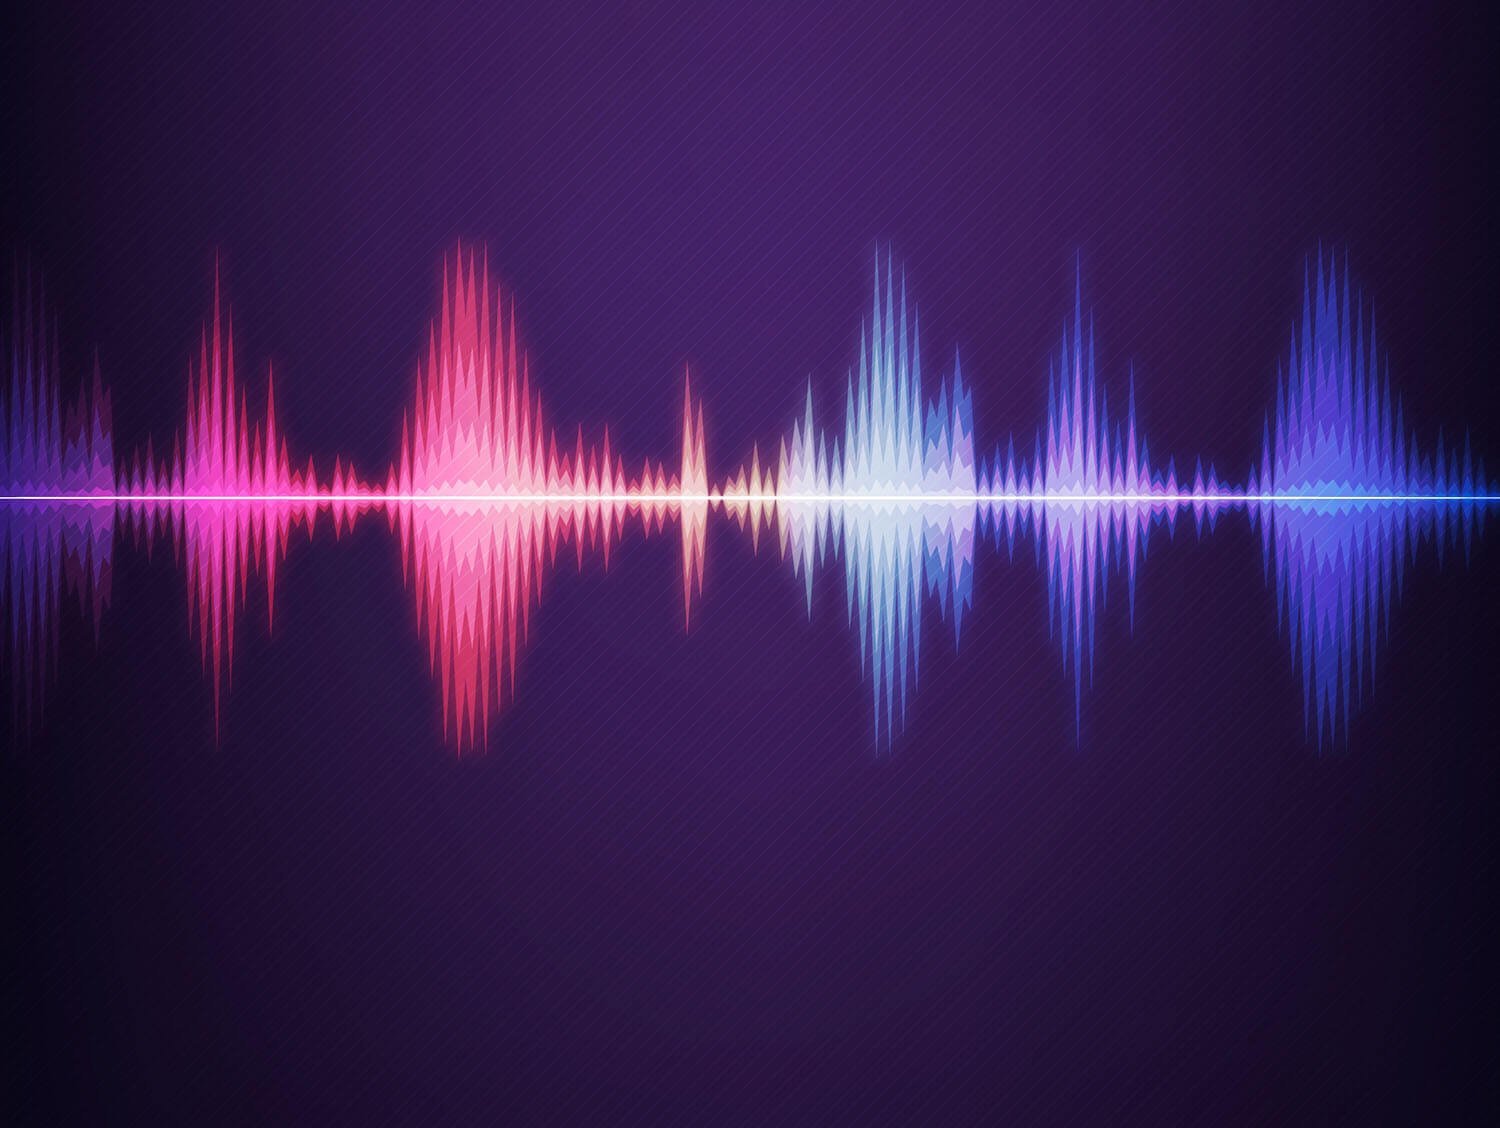 Voice тема. Звуковая волна. Музыкальная волна. Волны звука. Звуковая дорожка.